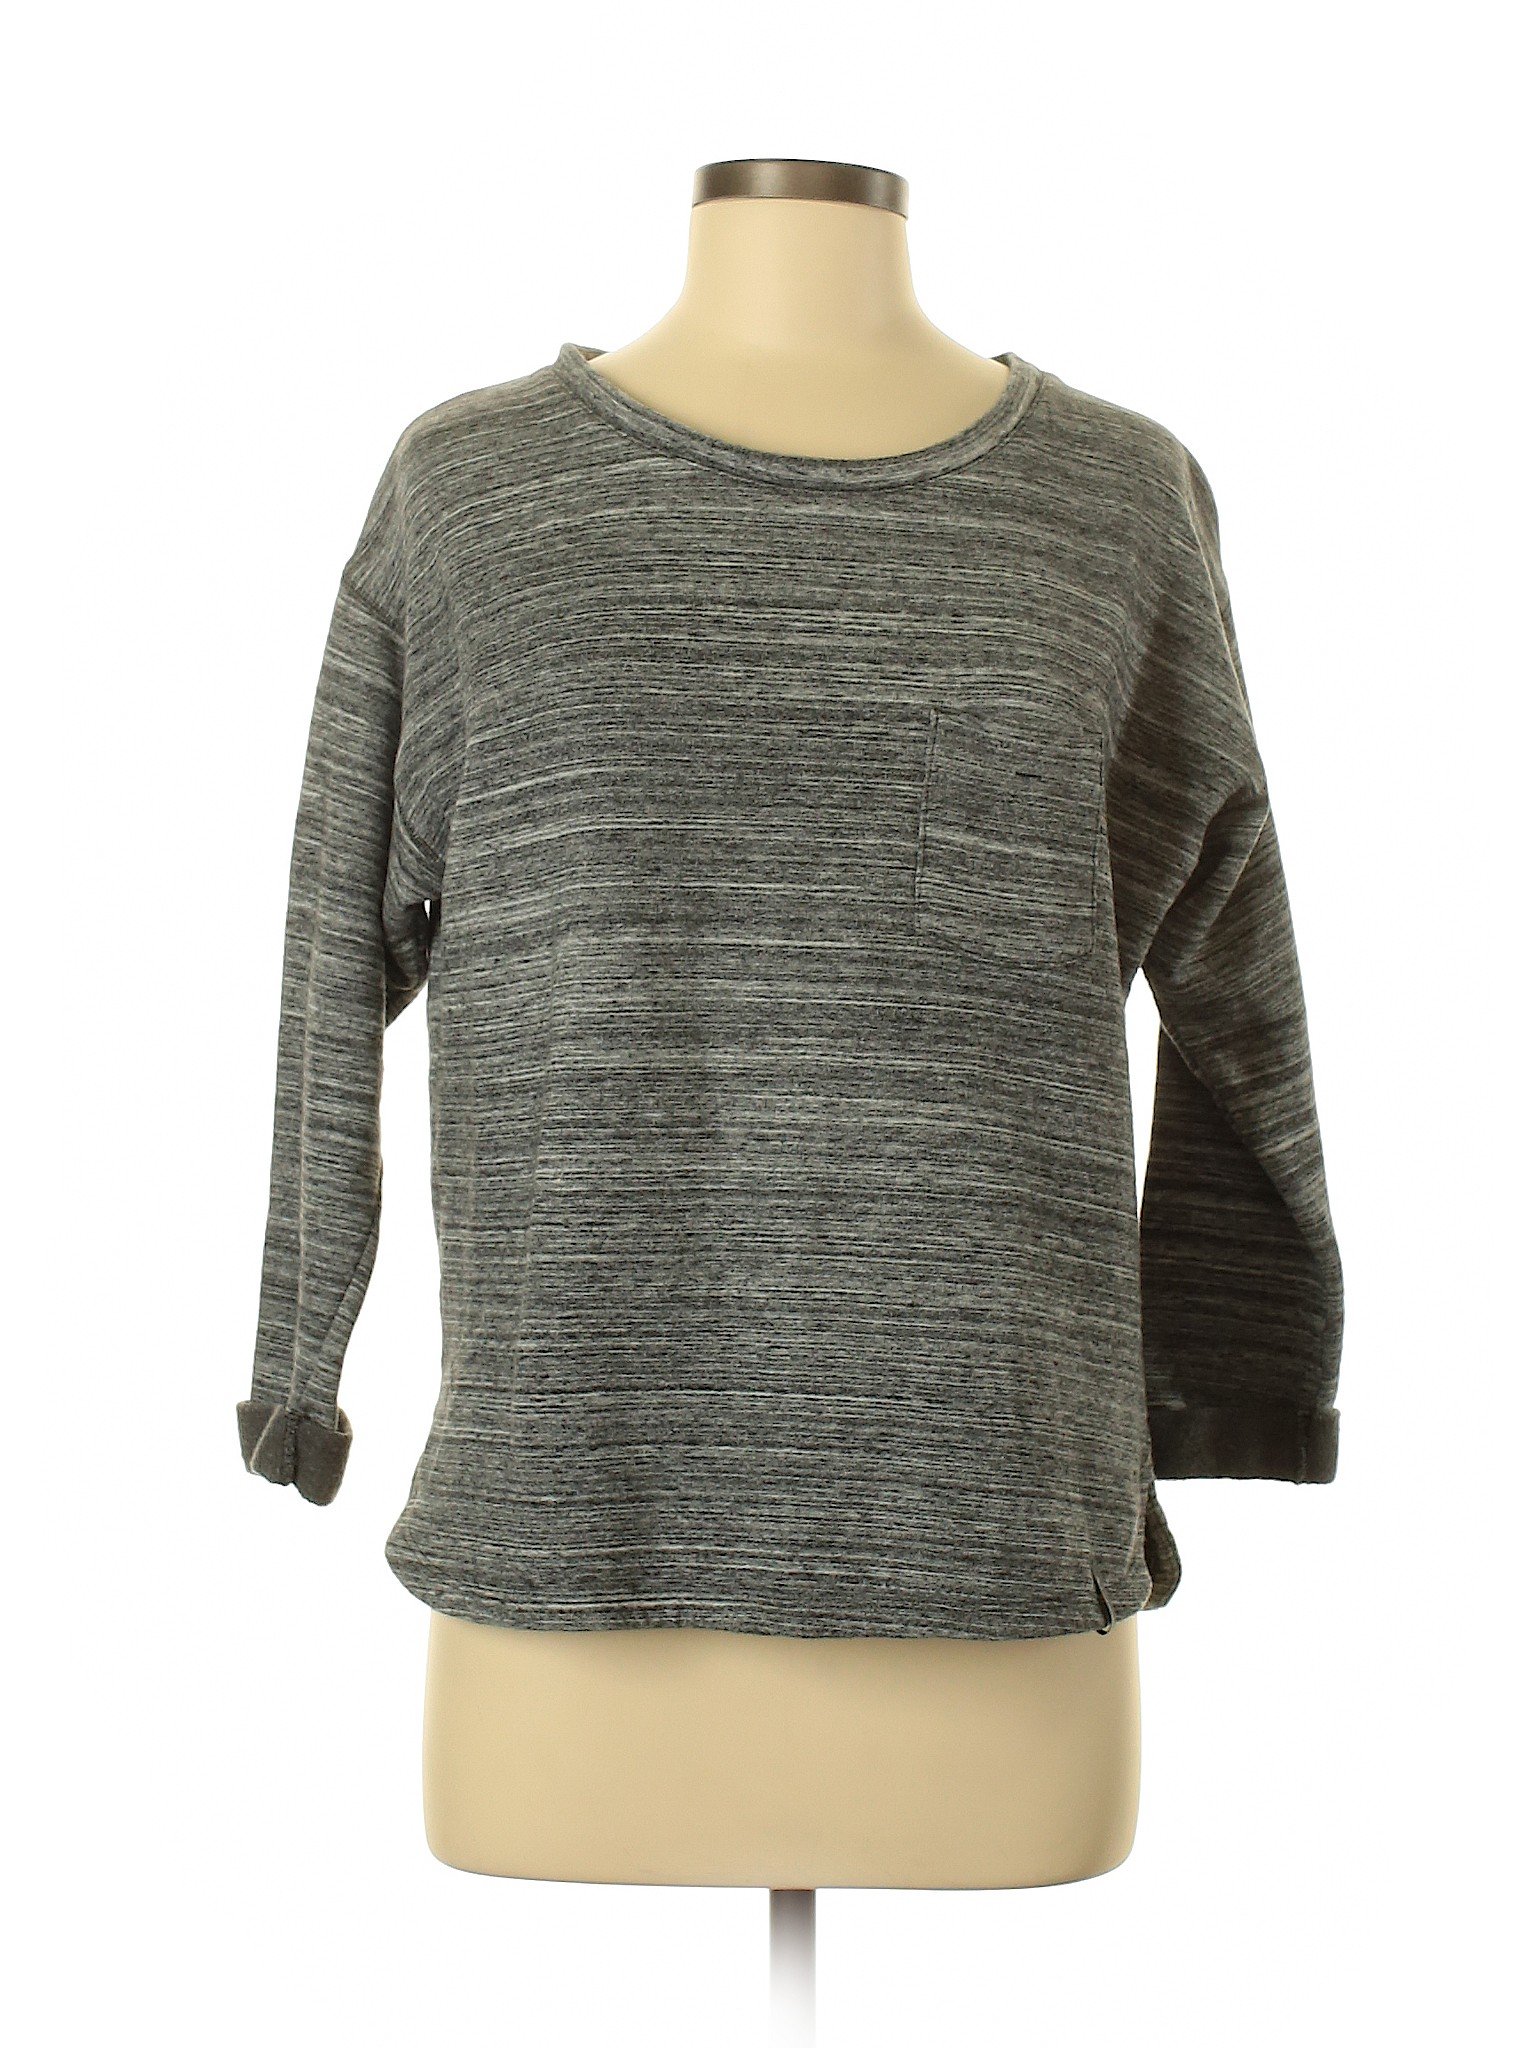 Columbia Women Gray Pullover Sweater M | eBay